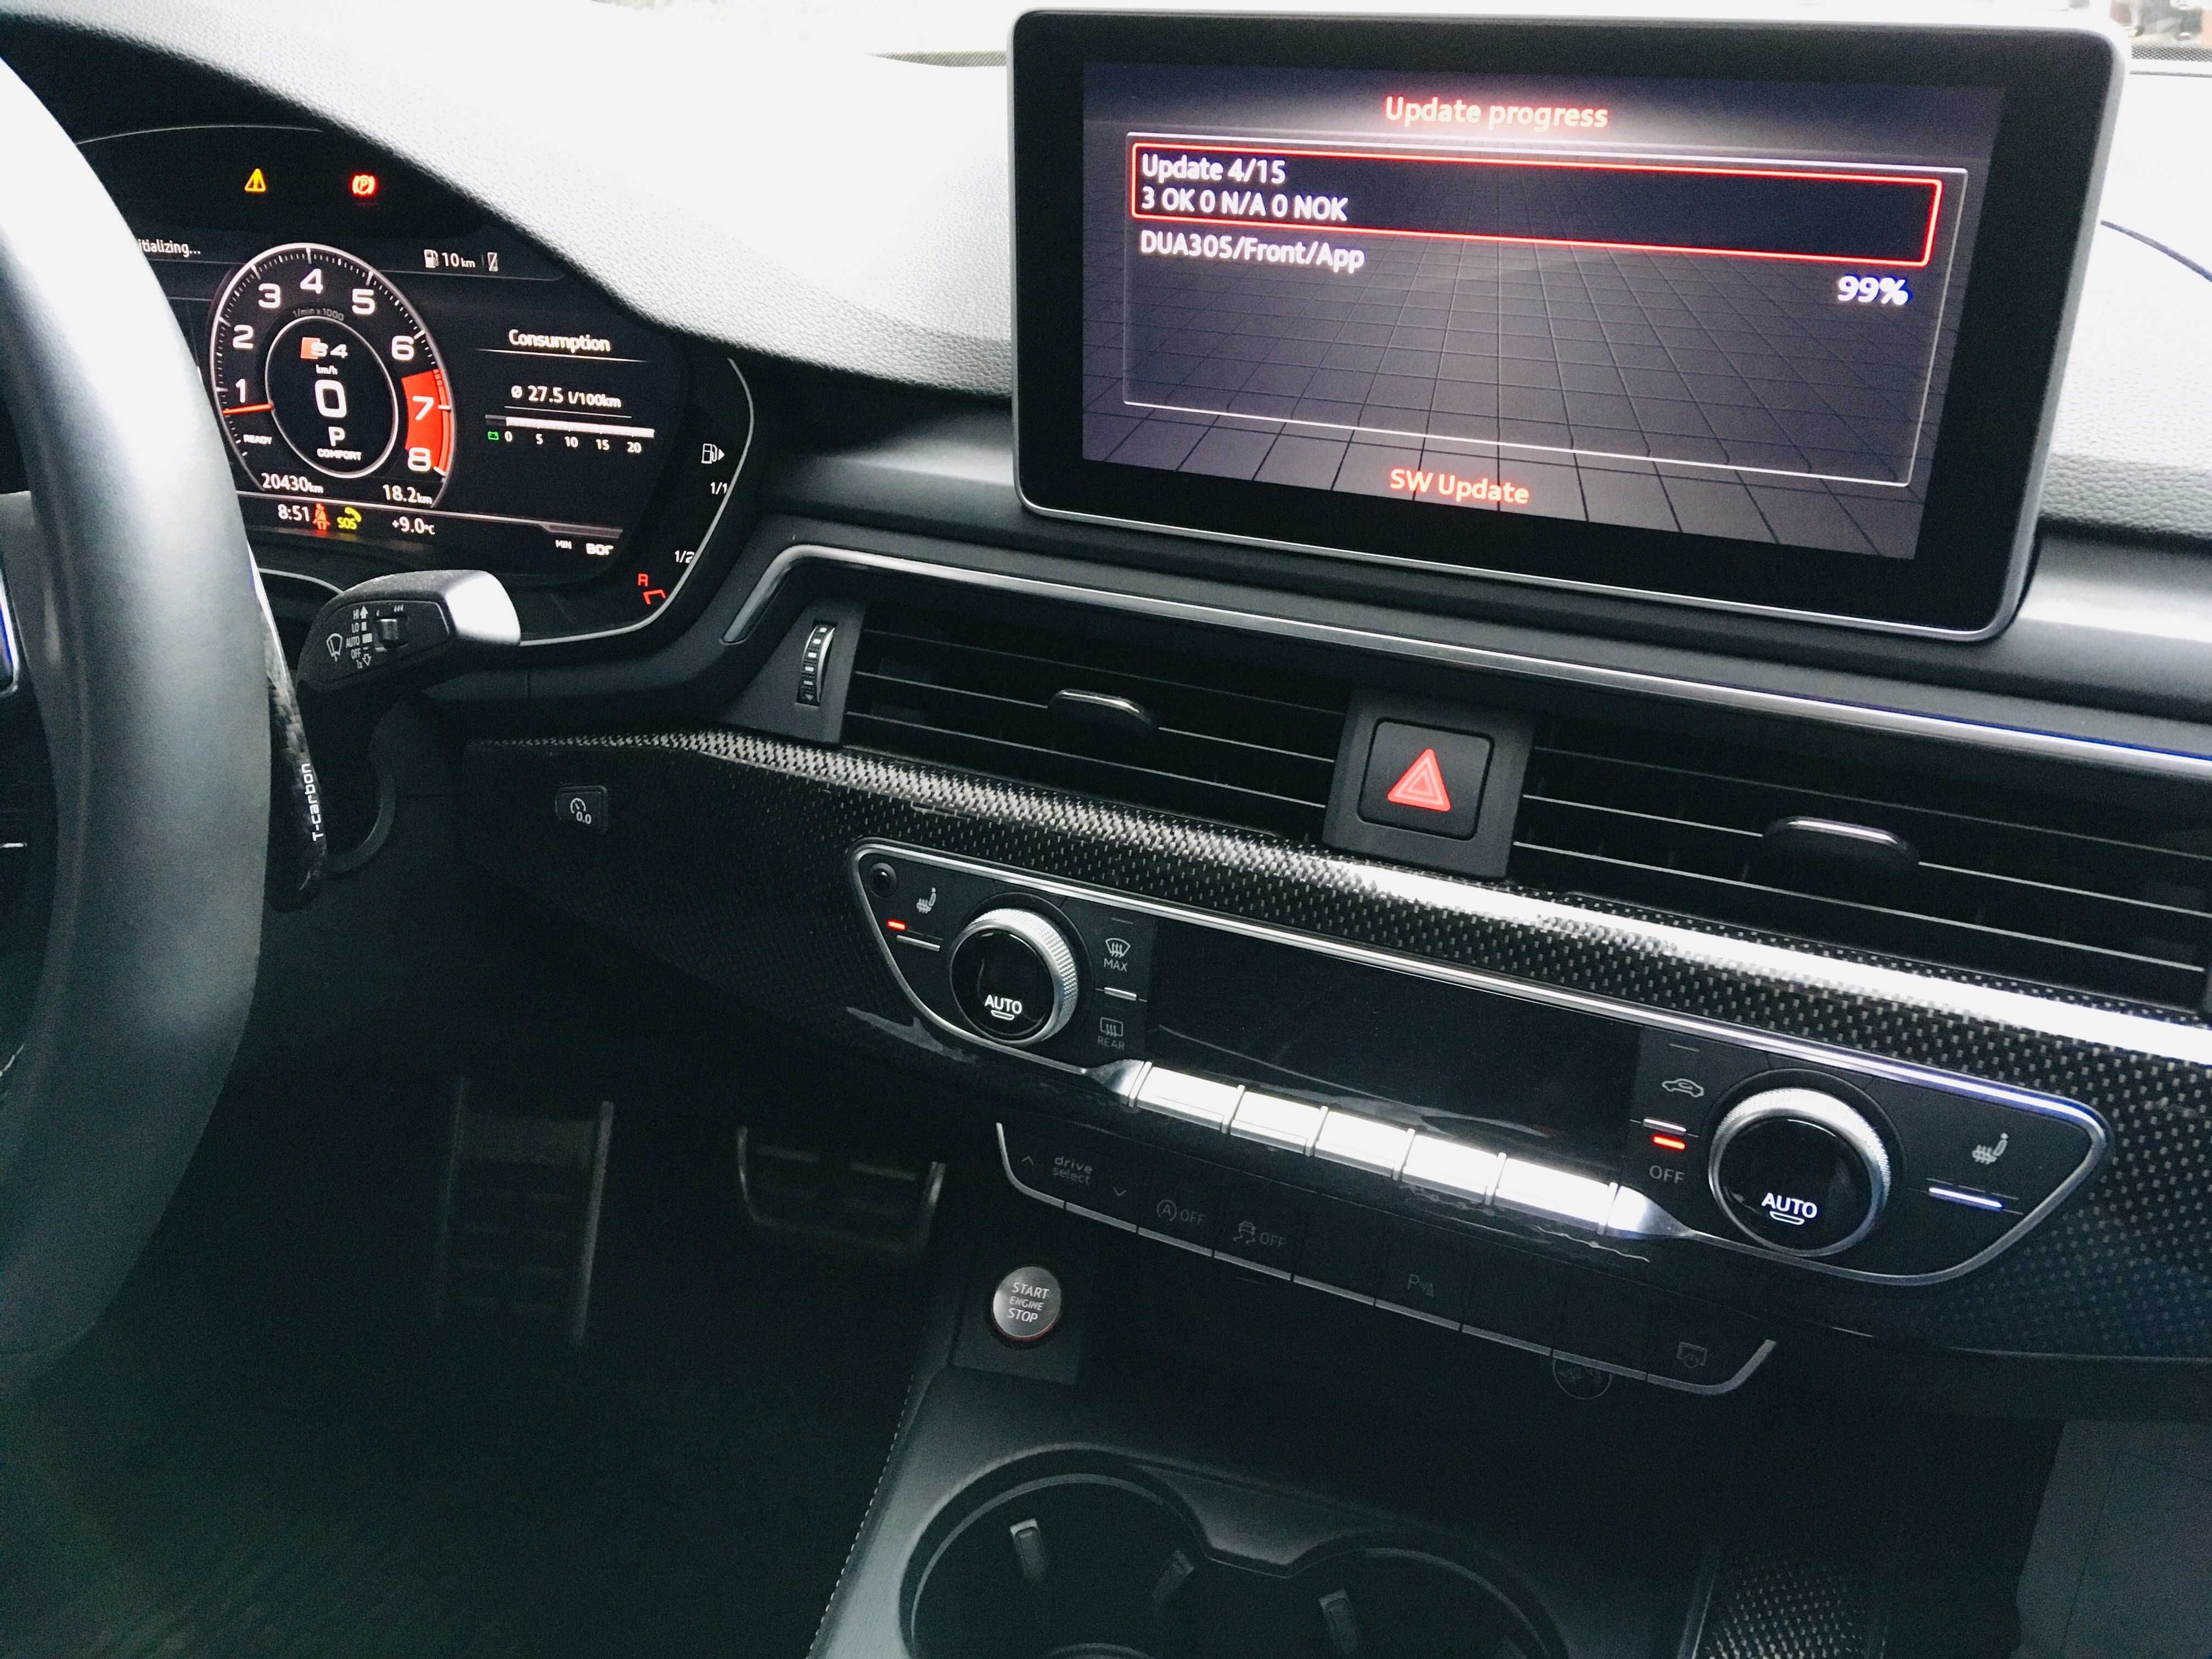 Audi MIB2 CarPlay Android Auto Map Update Fec License MIB1 Region ViM